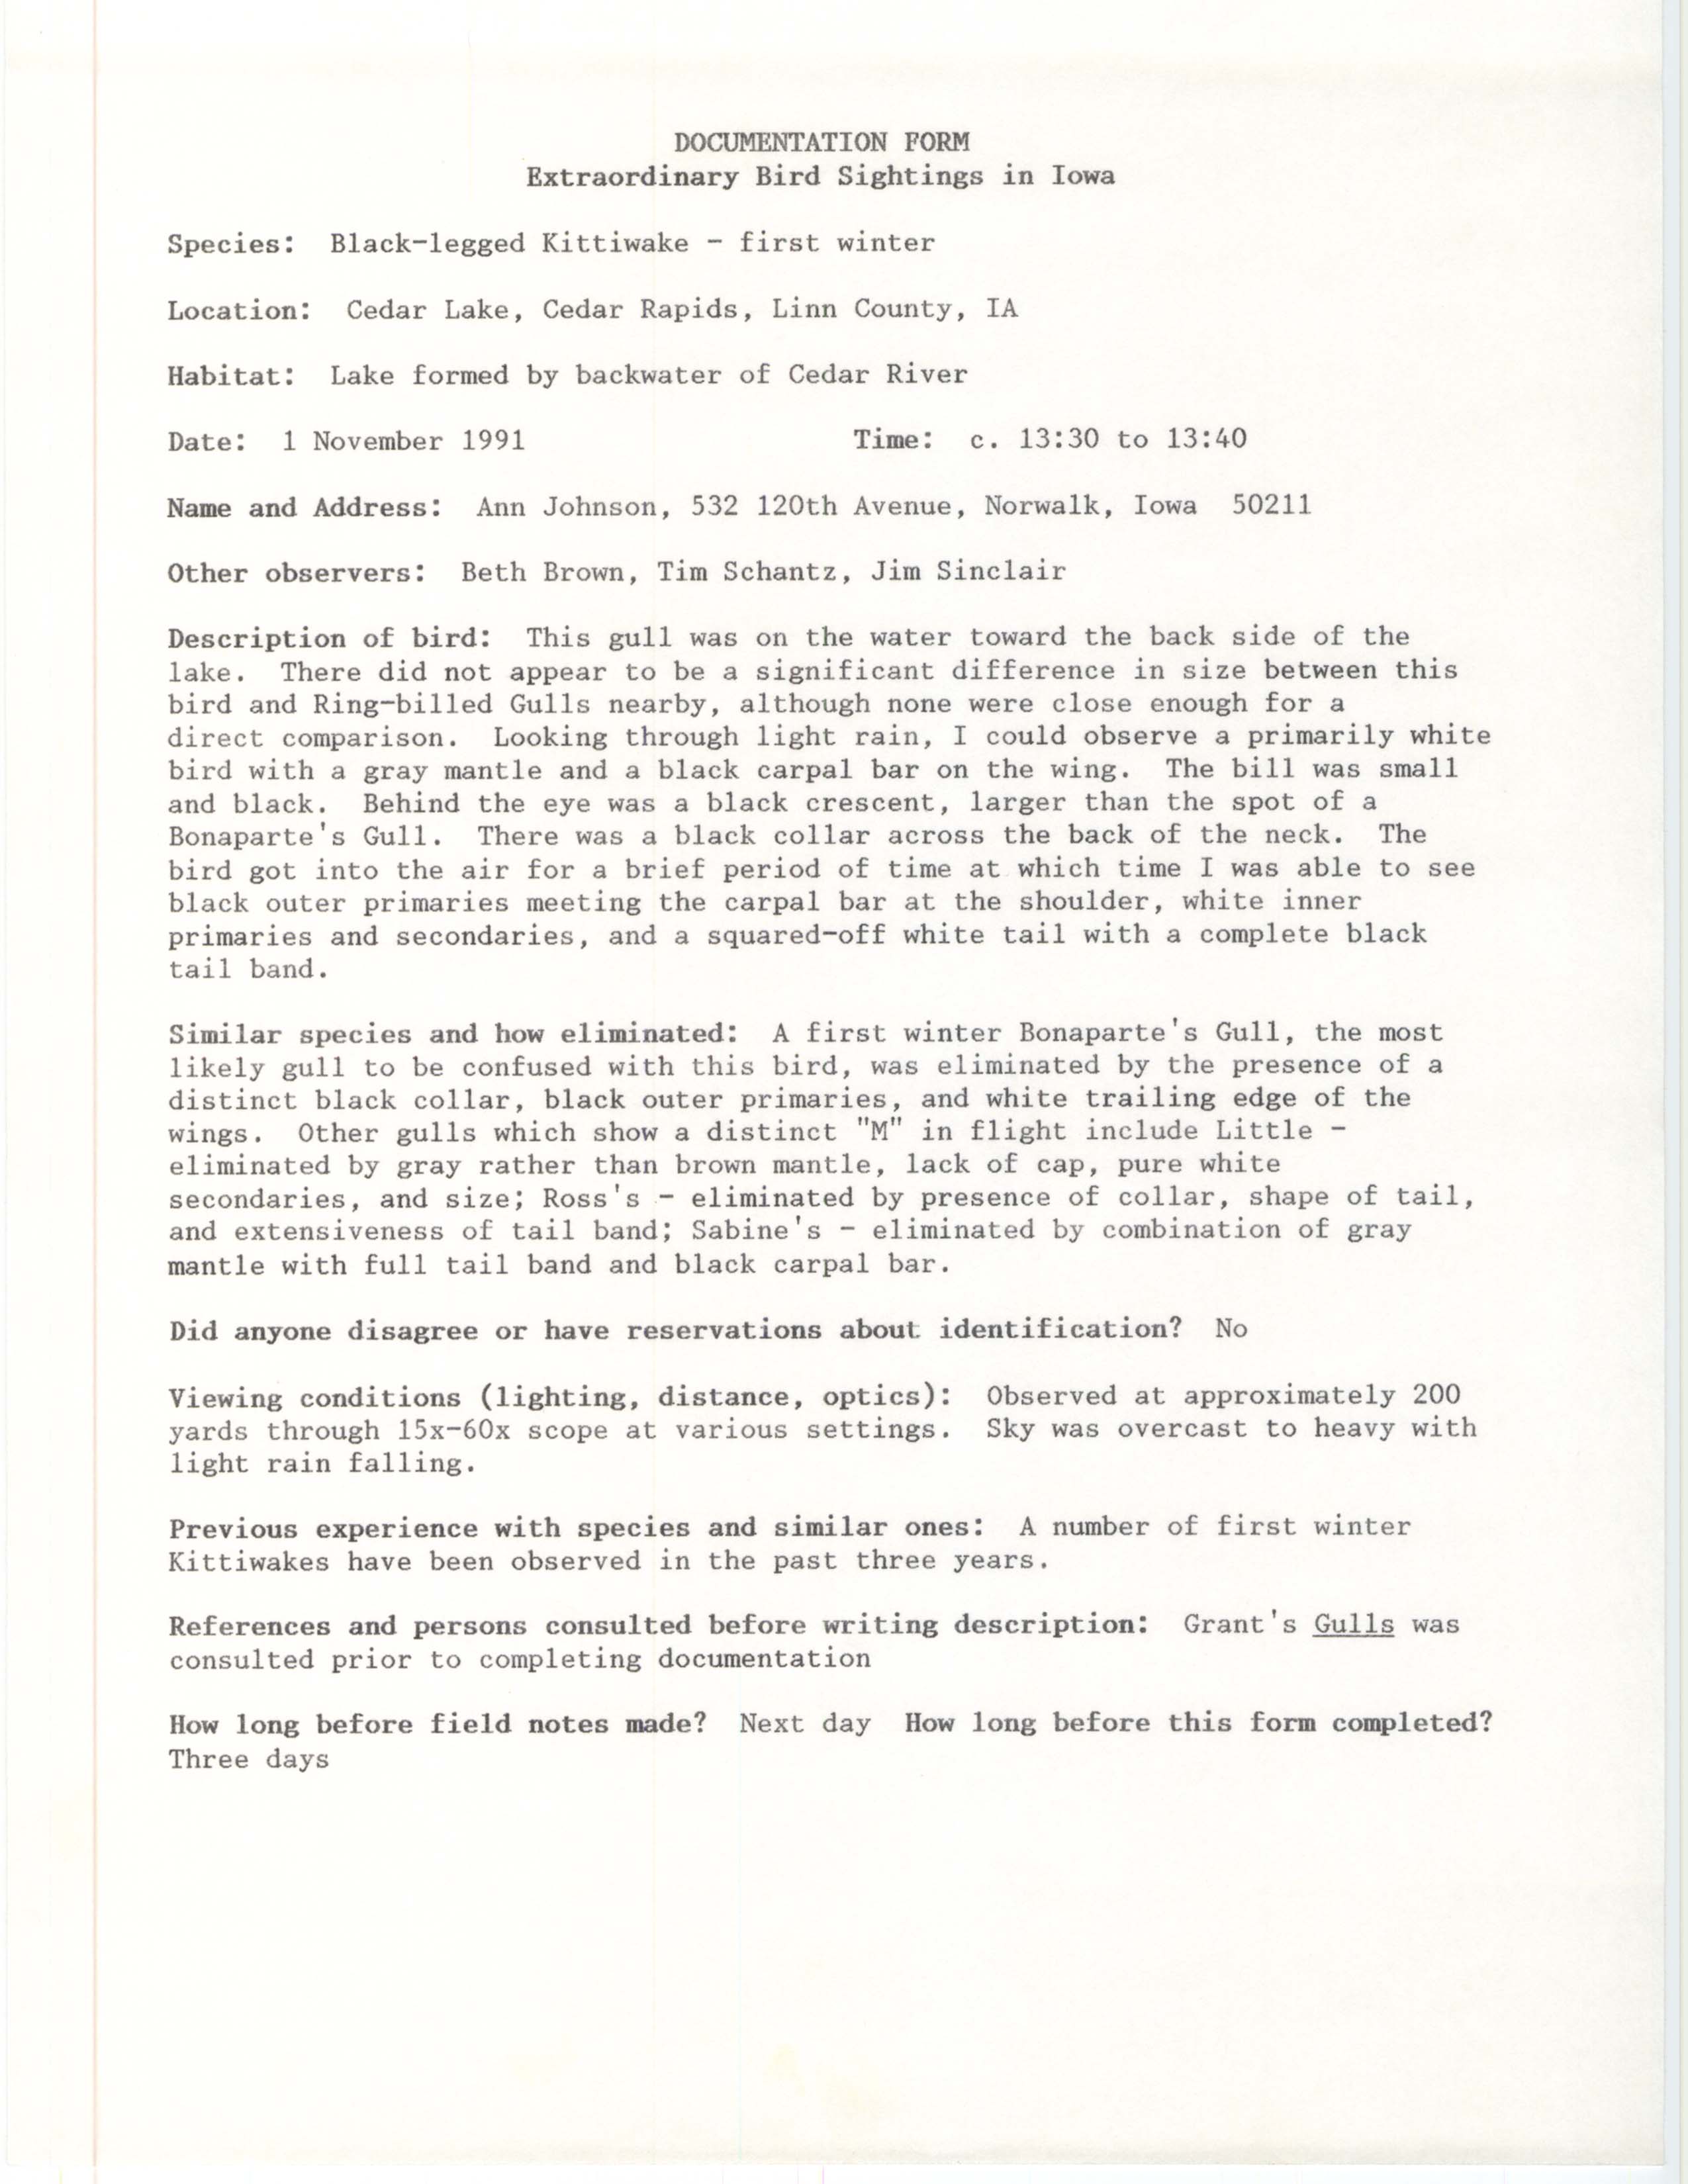 Rare bird documentation form for Black-legged Kittiwake at Cedar Lake, 1991